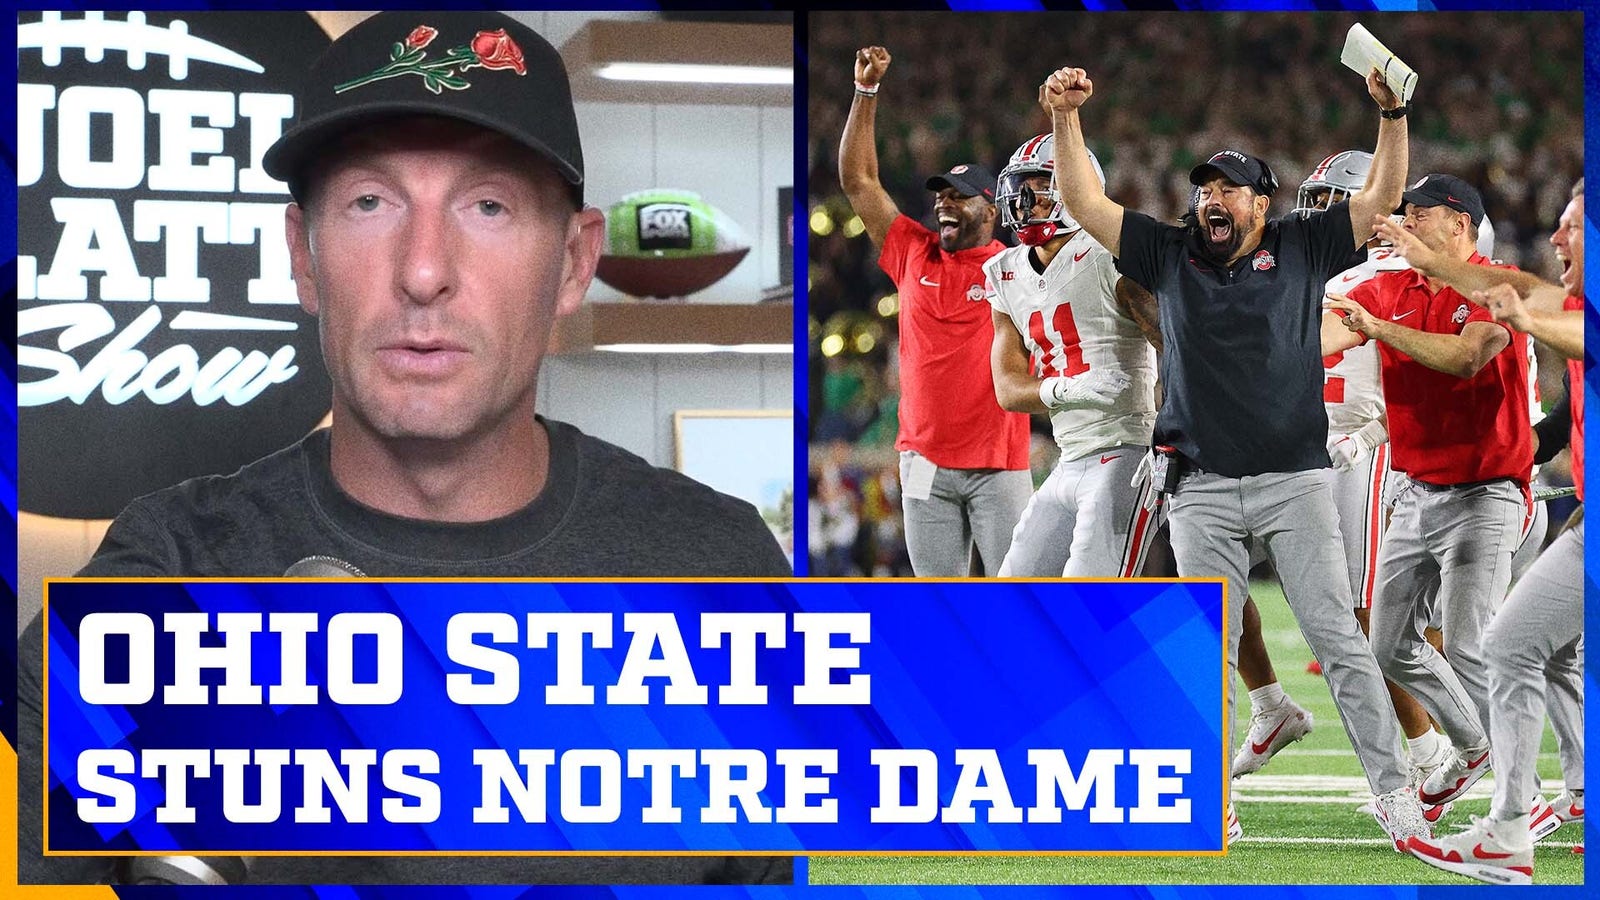 Joel Klatt reacts to Ohio State's stunning victory over Notre Dame